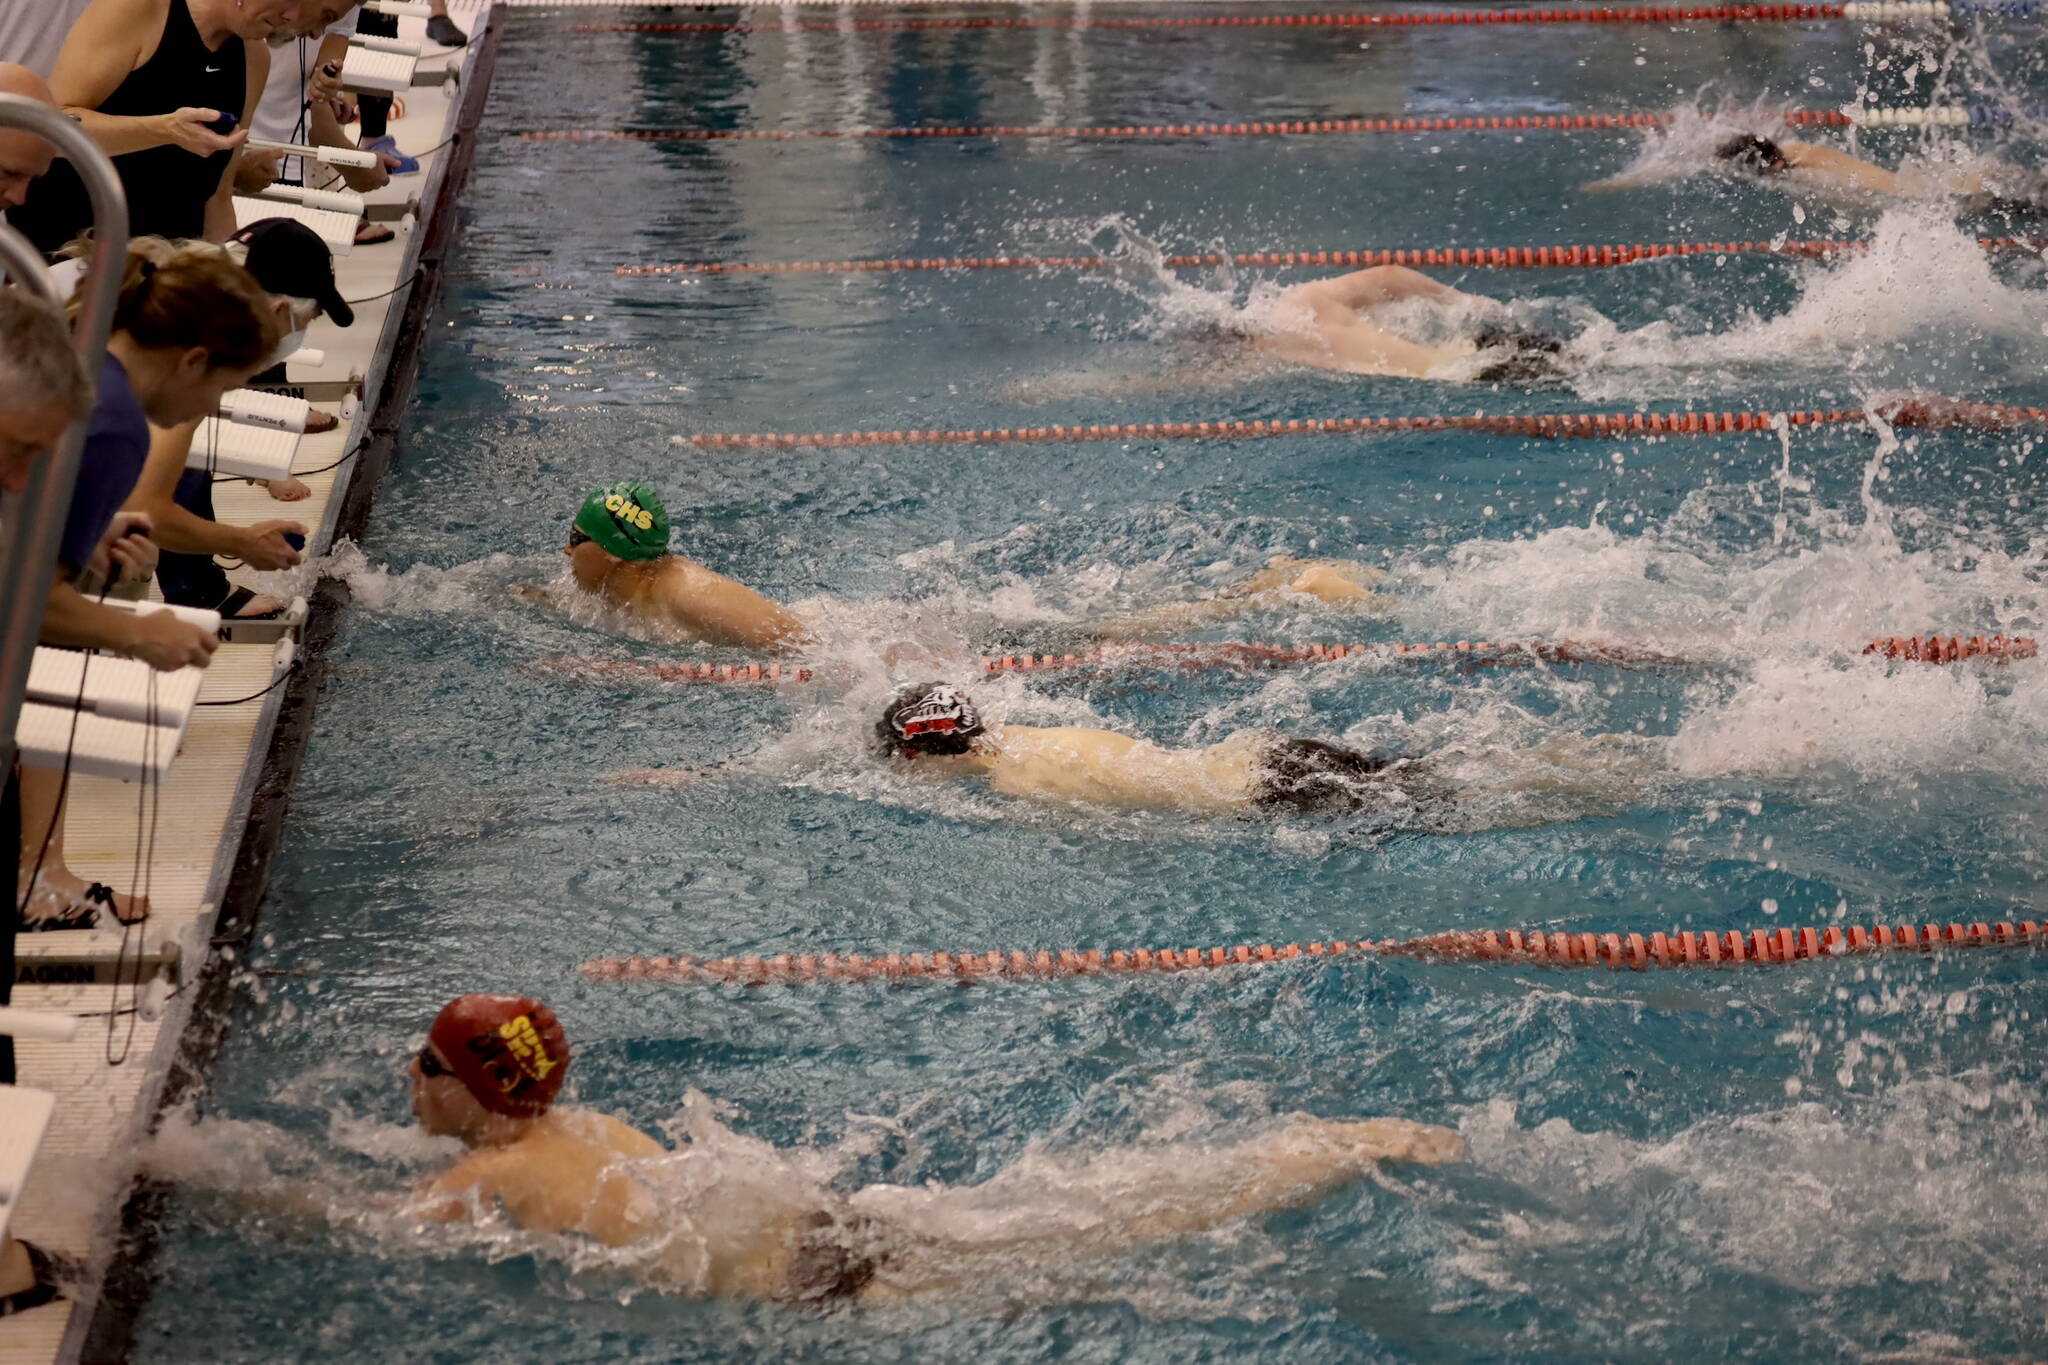 Clarise Larson / Juneau Empire
Athletes compete in a swim event Saturday afternoon at the Dimond Park Aquatic Center.